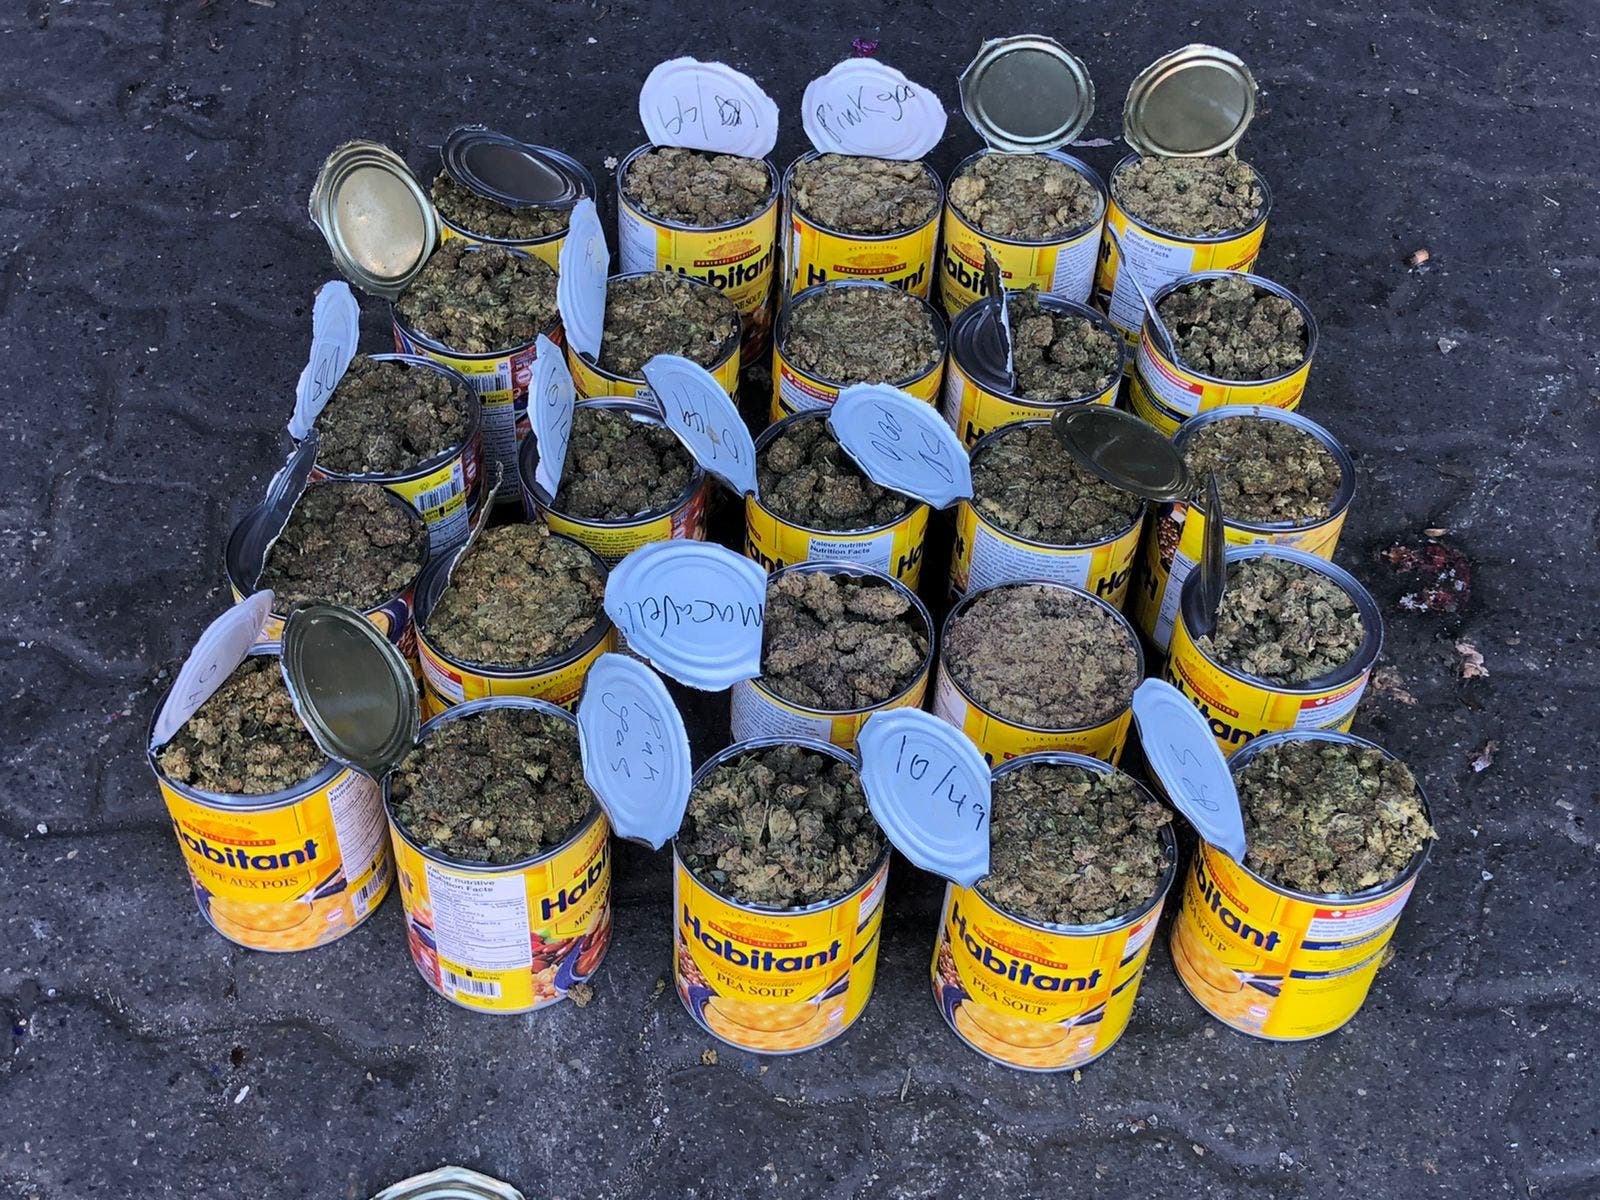 Autoridades incautan otras 25 latas rellenas de marihuana en Puerto Haina